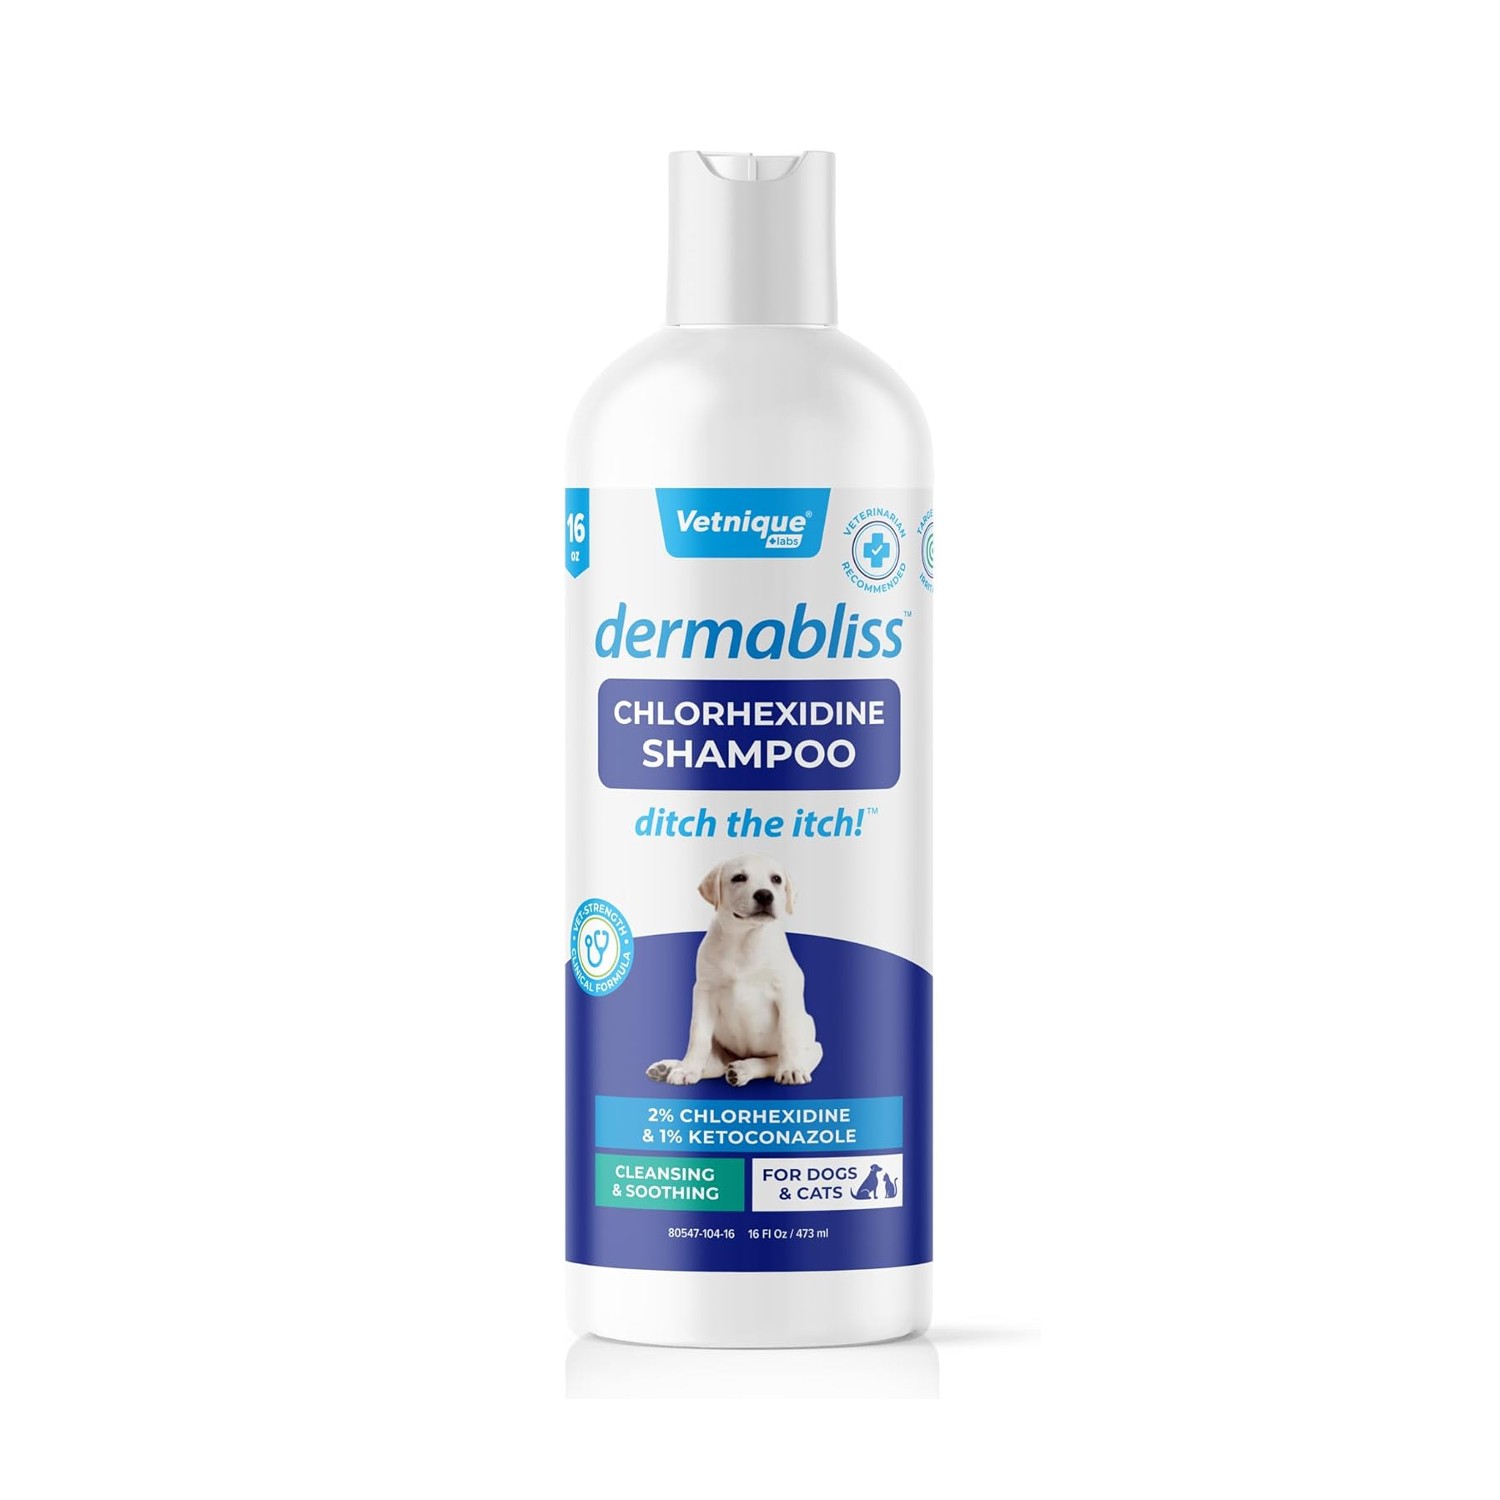 Dermabliis Chlorhexidine Shampoo for Dogs & Cats